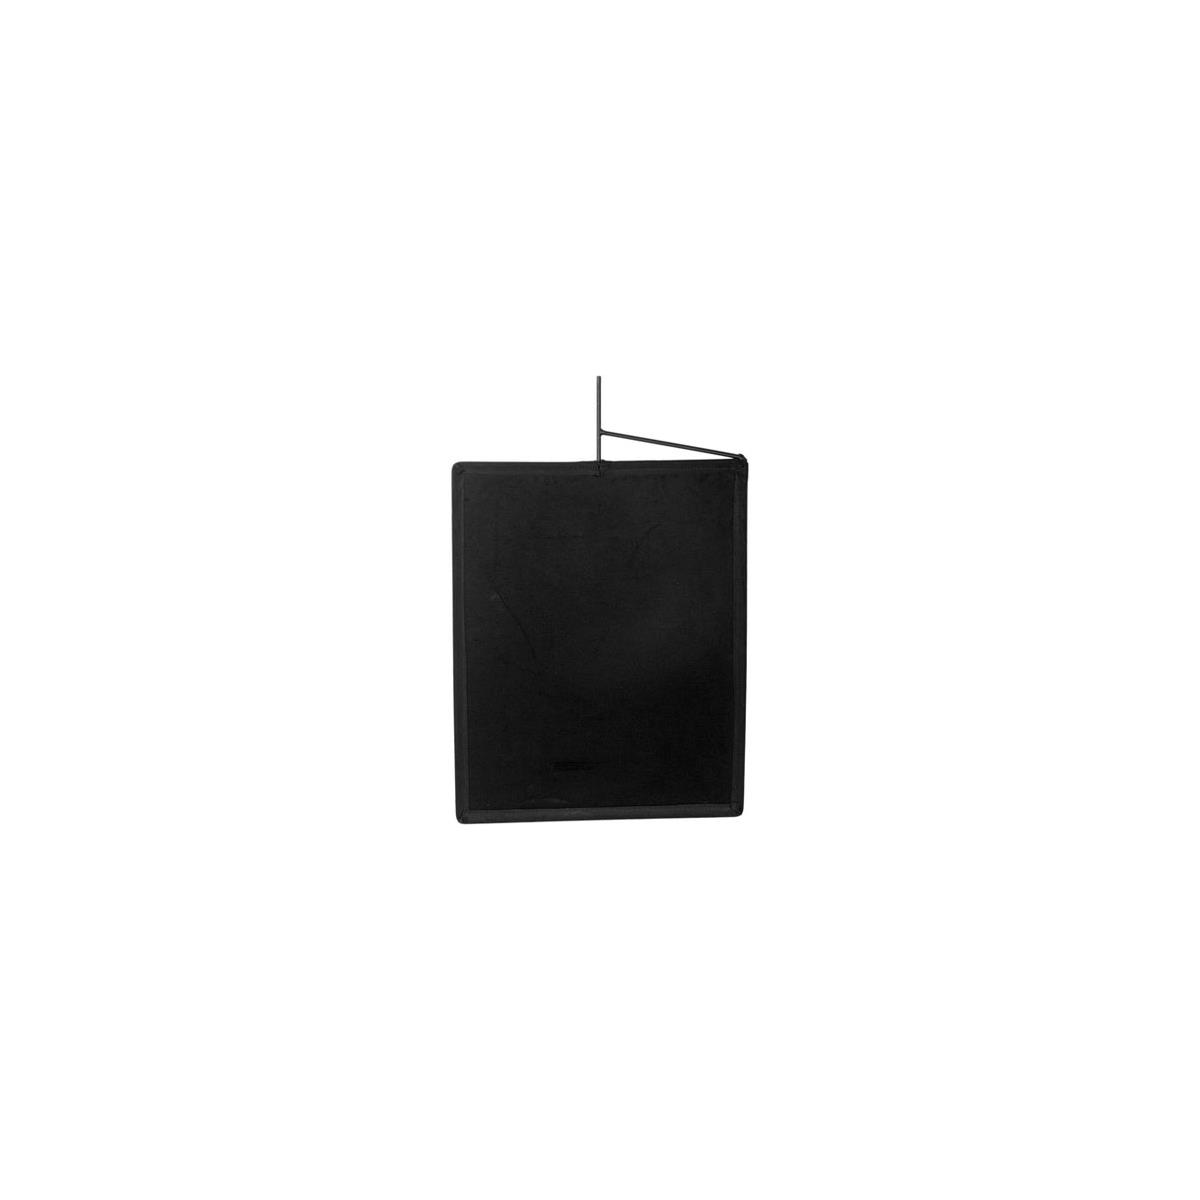 Image of Matthews 169010 24x30in Solid Black Flag